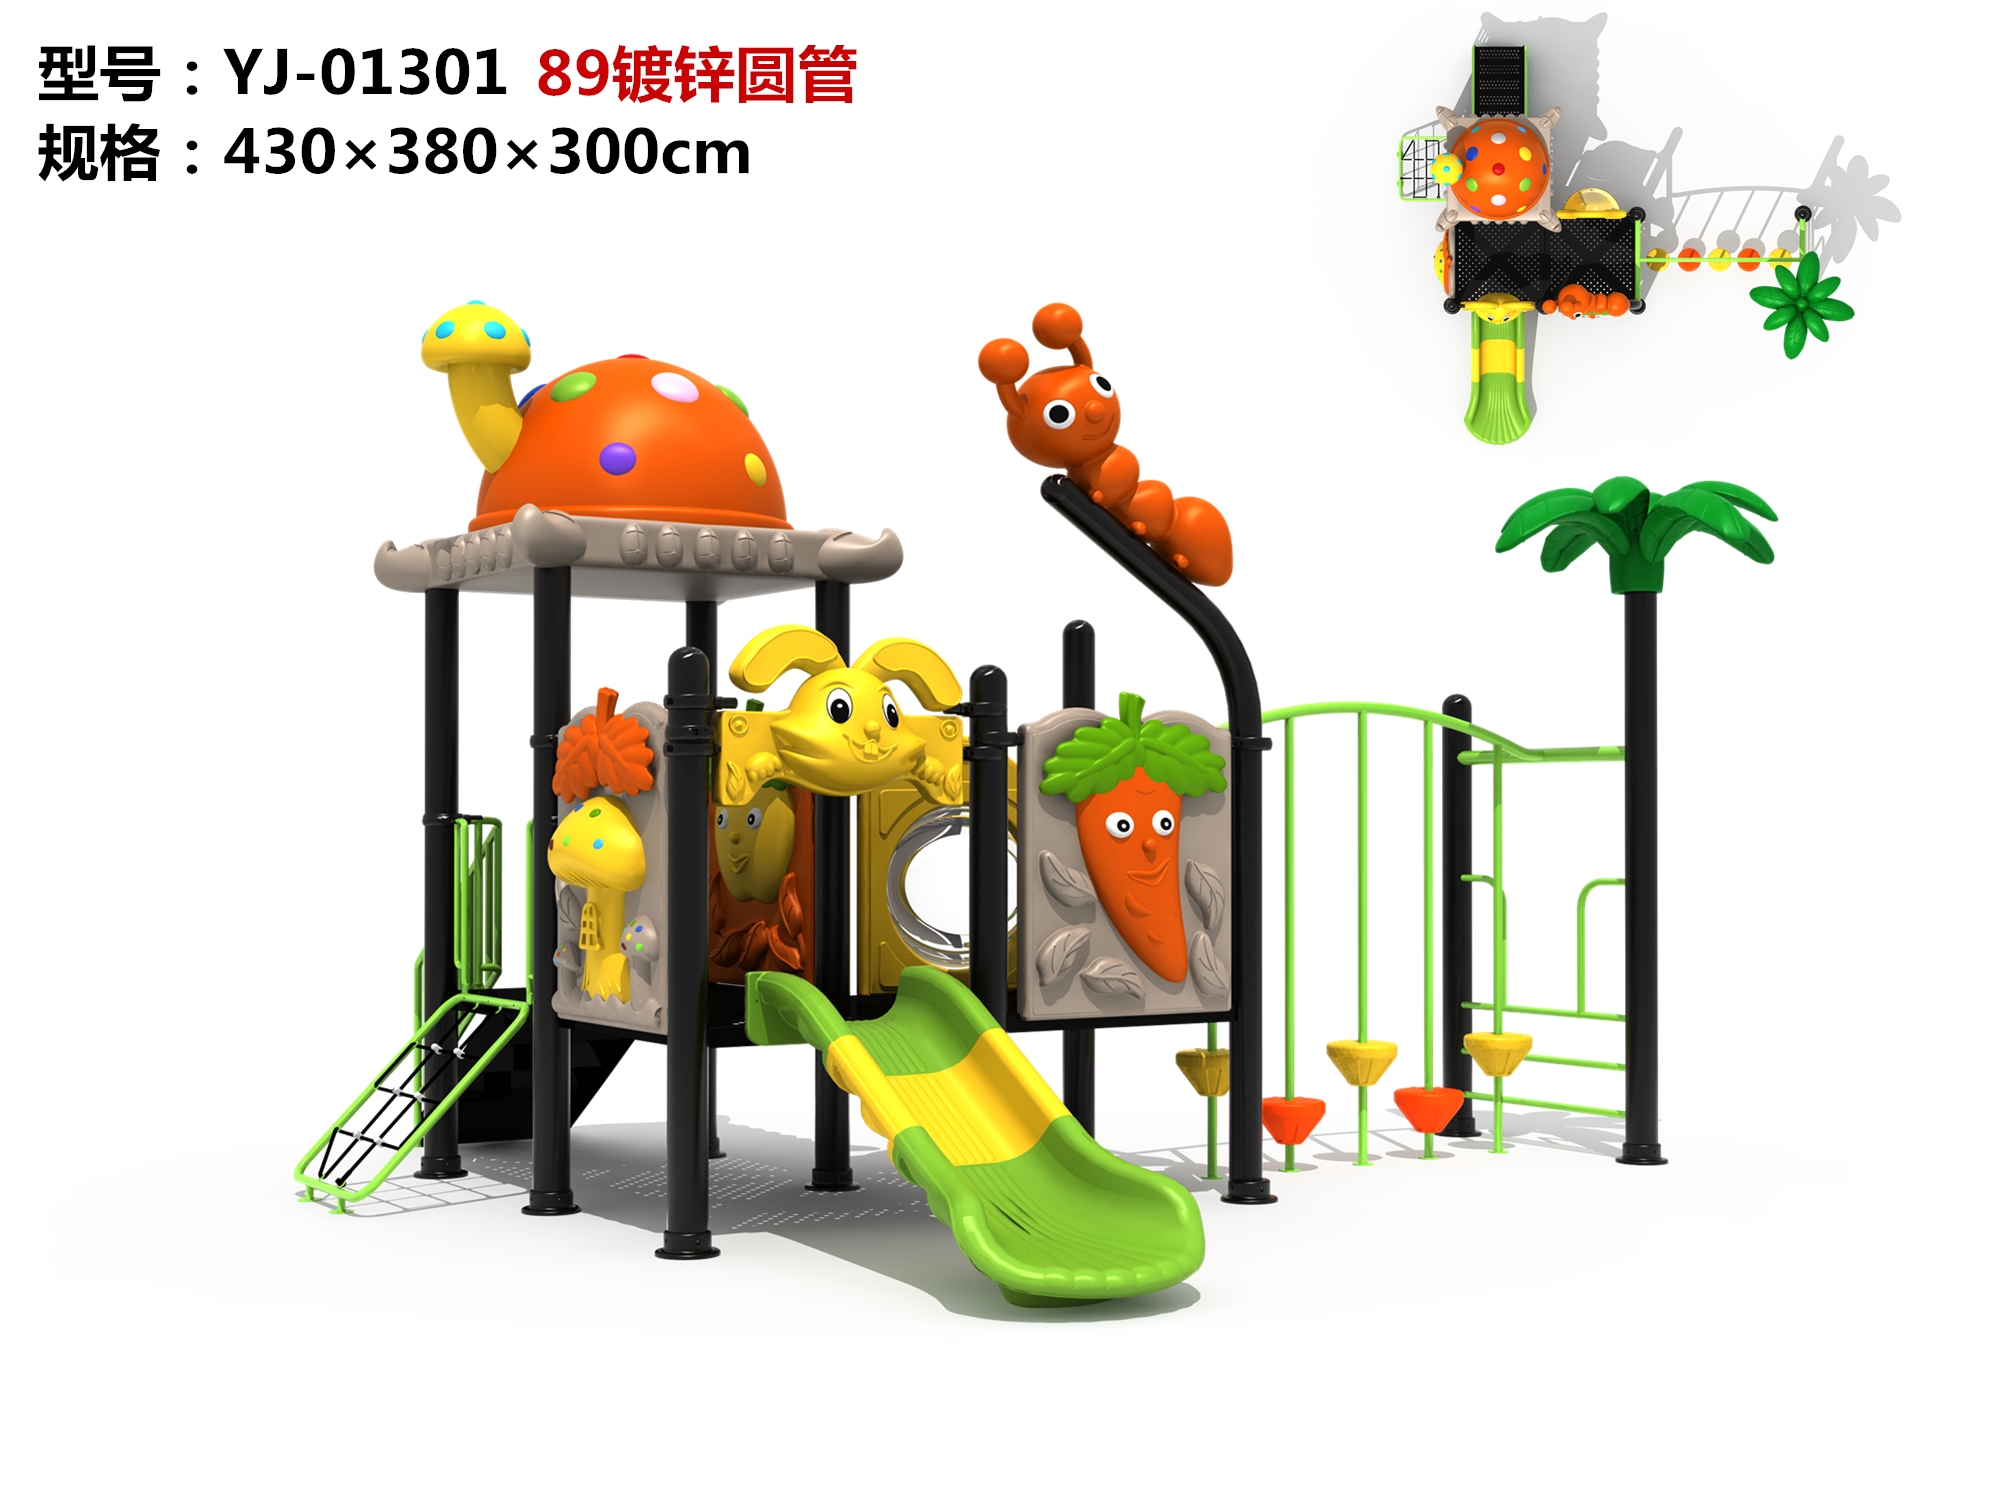 OL-MH01301Home Slide Play Playset